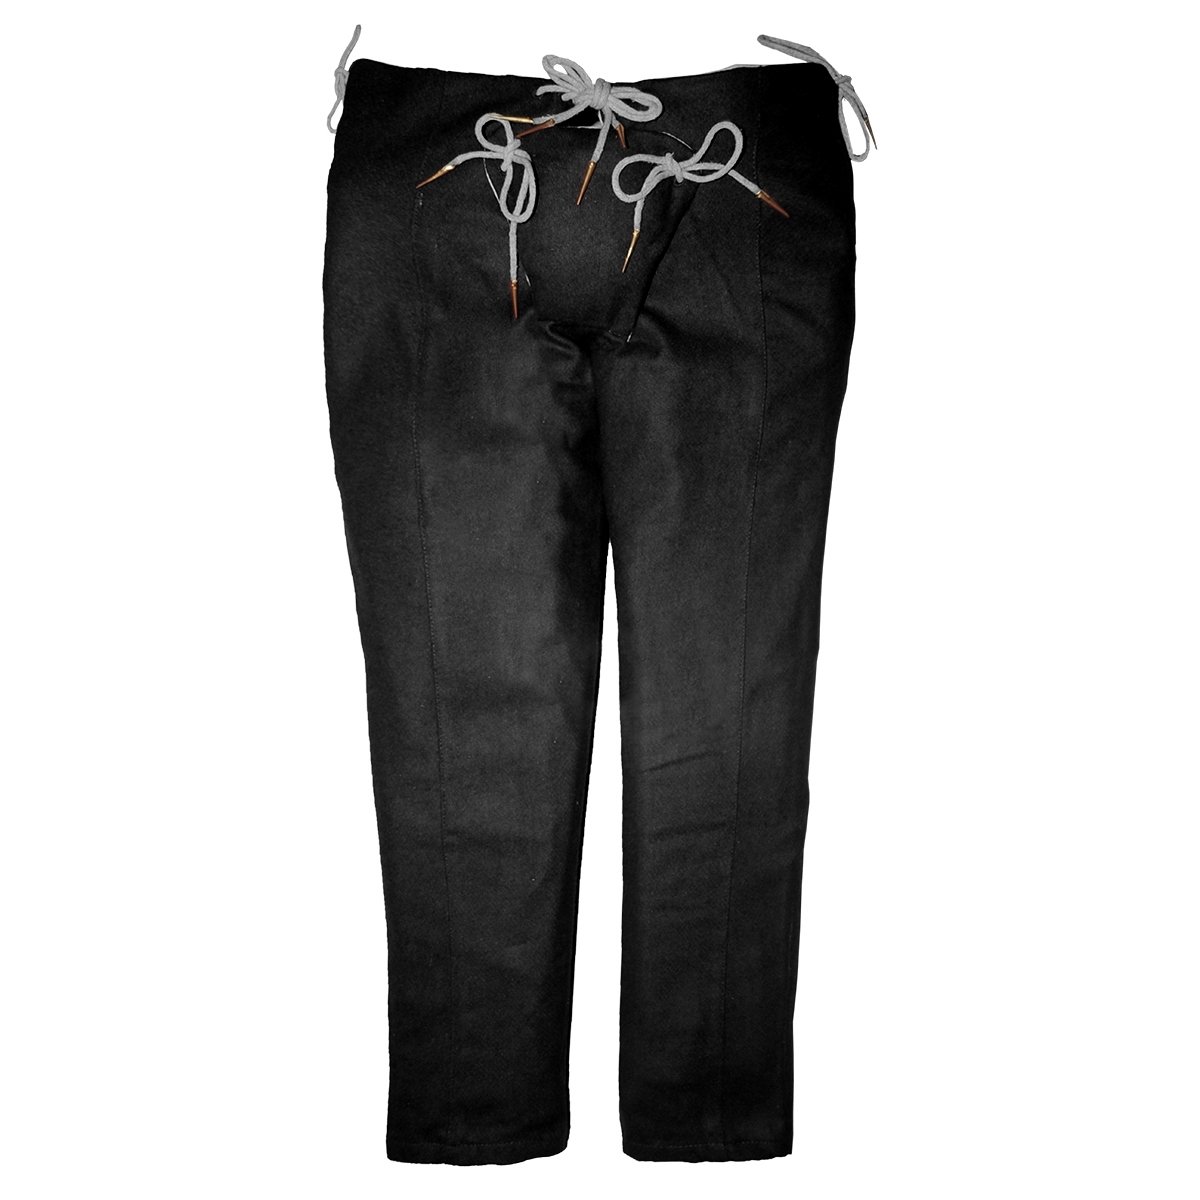 Man's 15th C. Trousers -Black, Size L